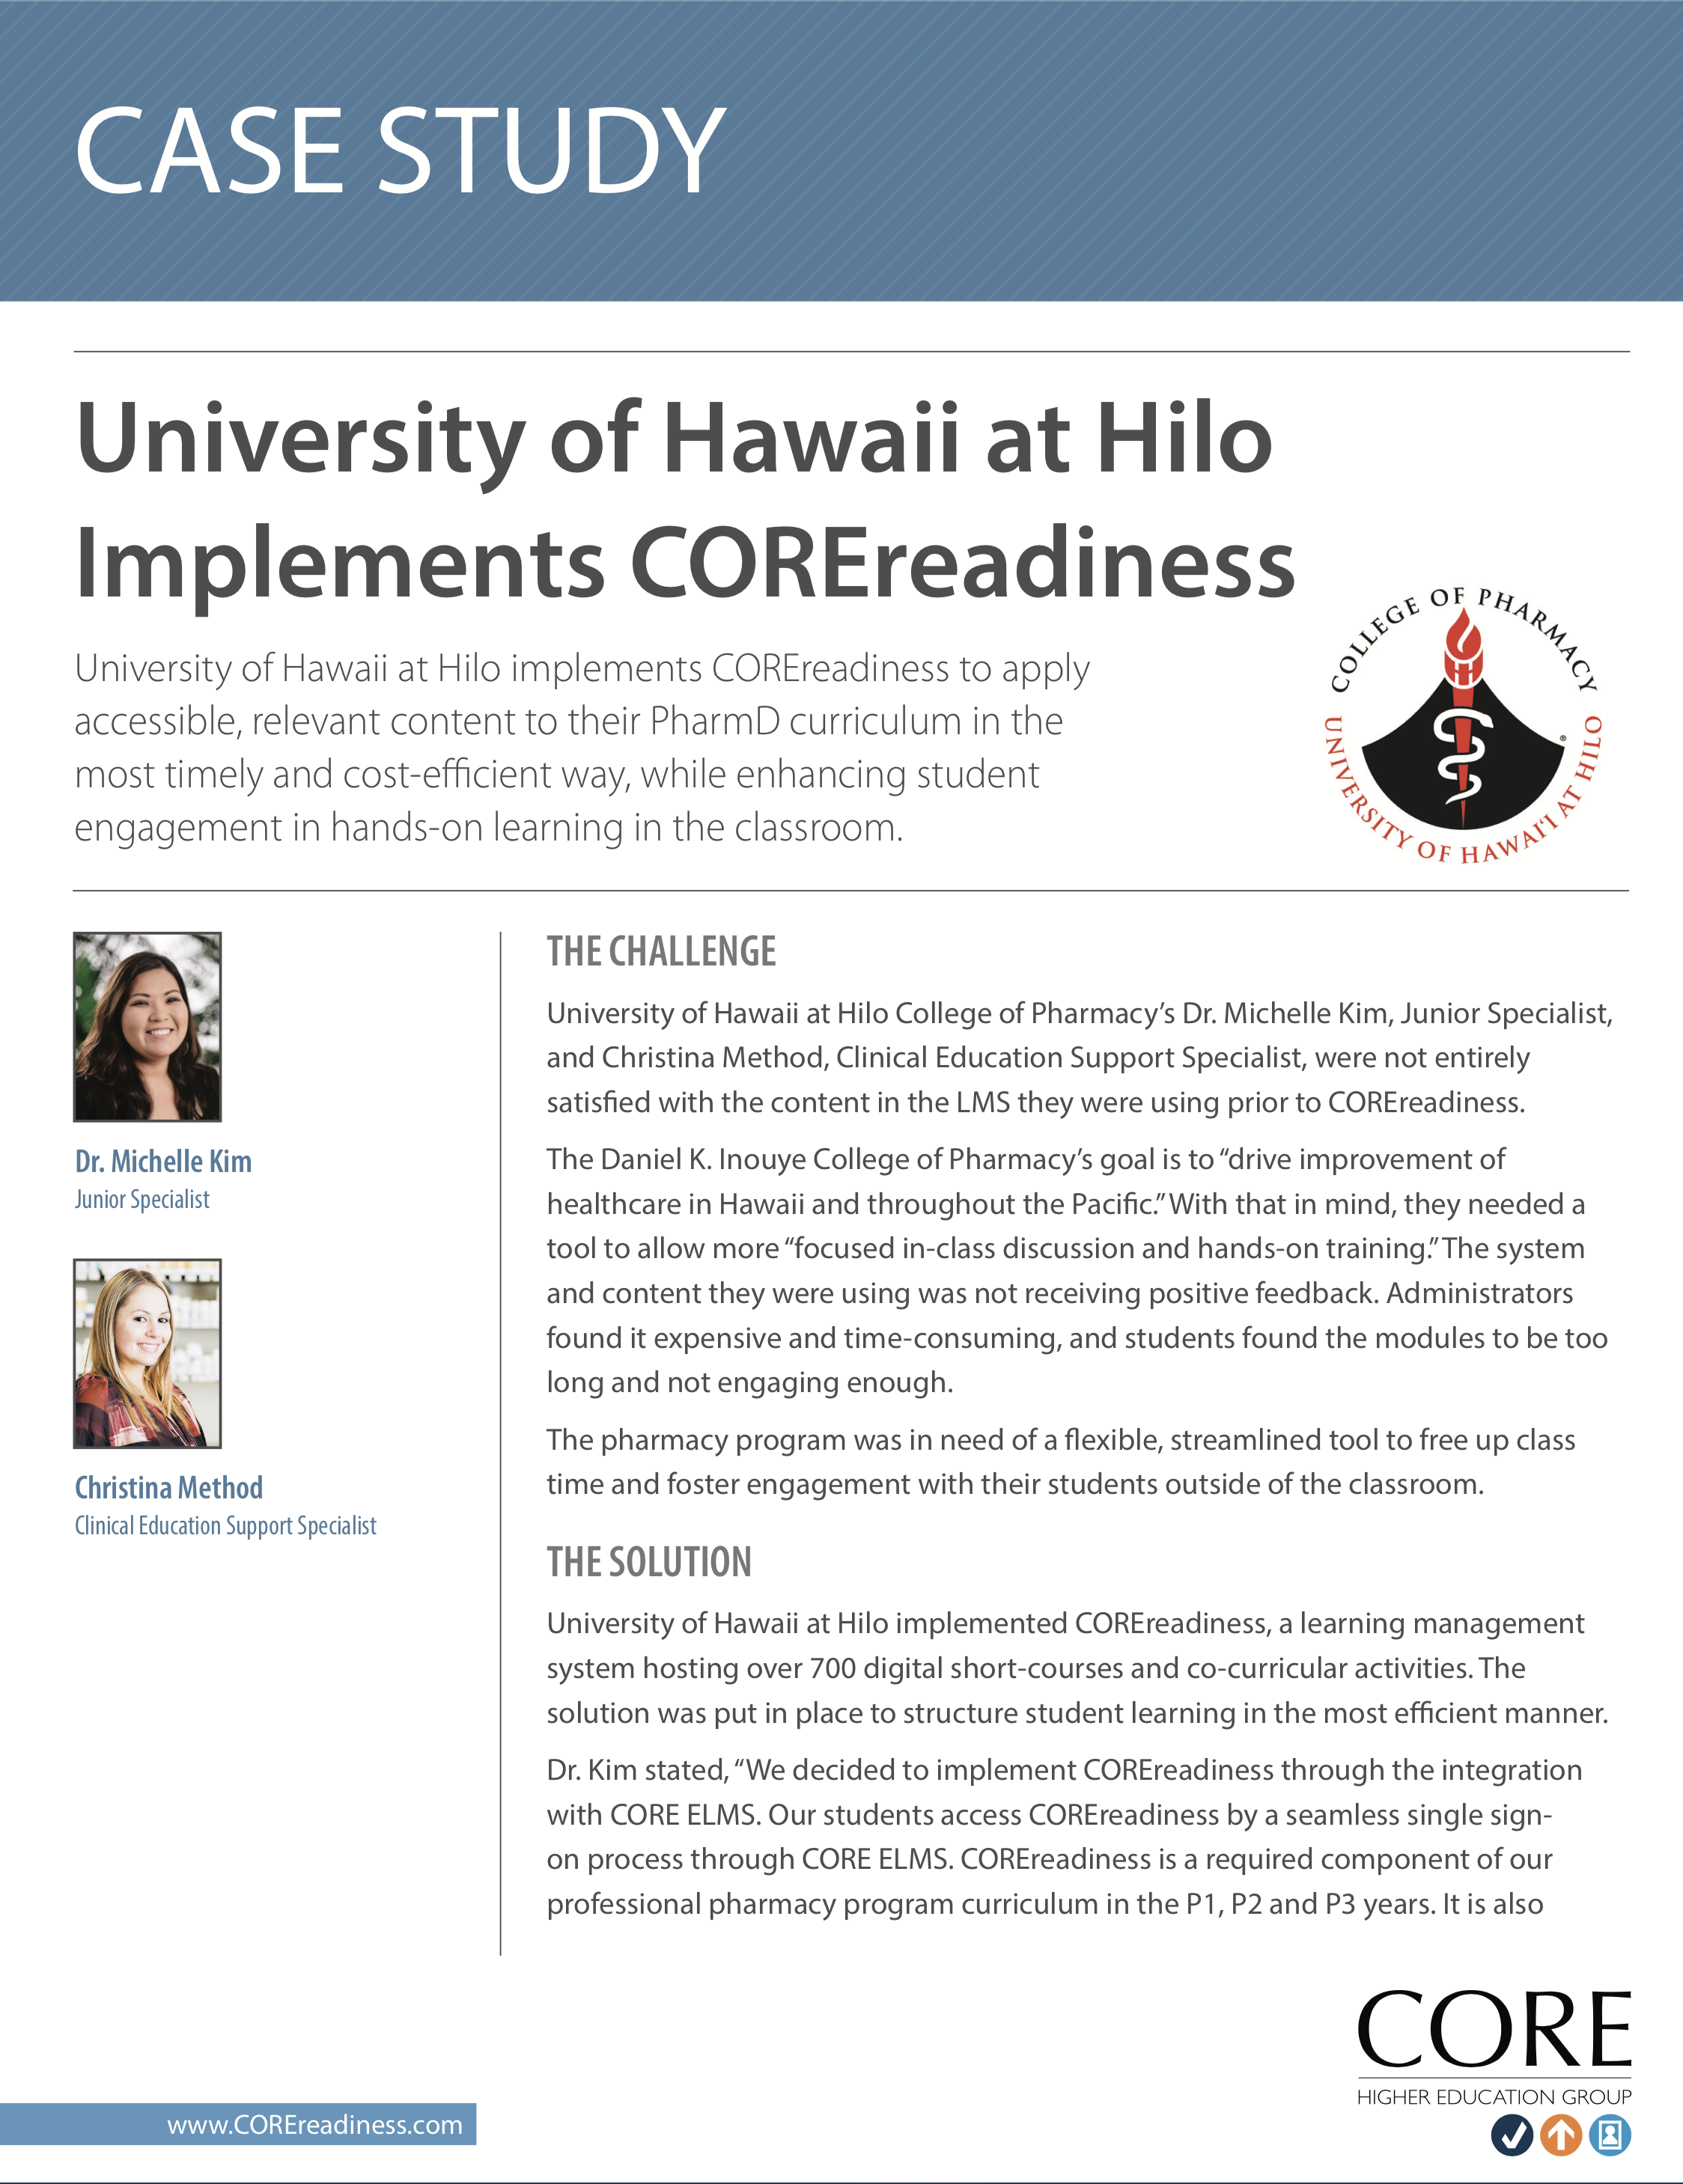 University of Hawaii Case Study